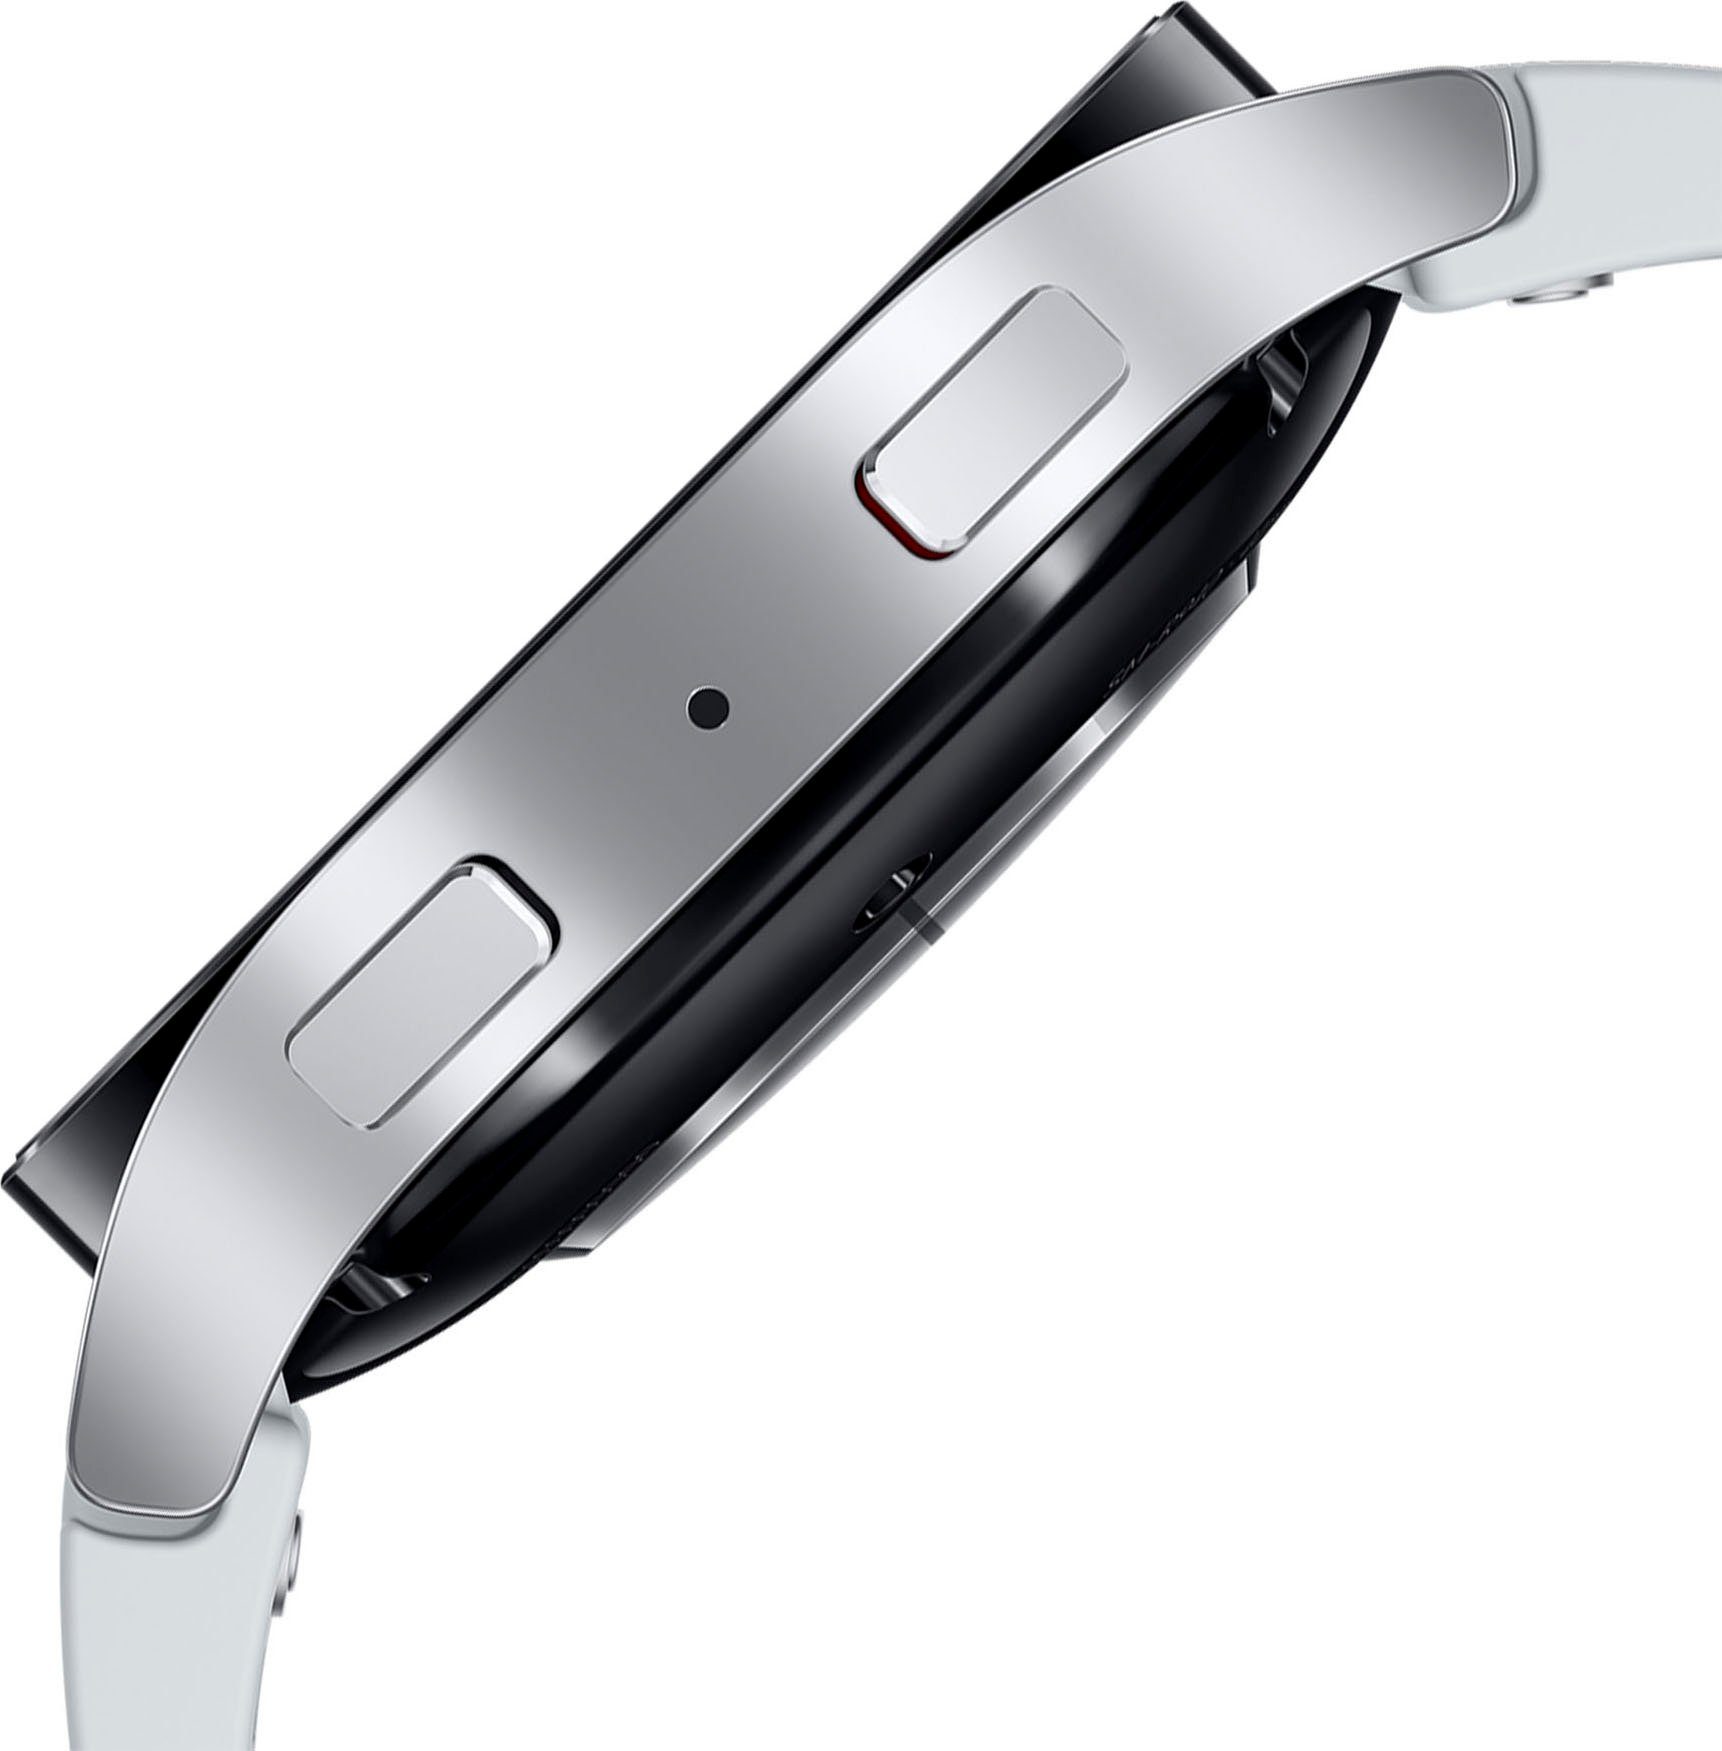 Samsung Galaxy Watch OS Smartwatch Samsung) (3'73 Silber | by 44mm Silber cm/1'5 6 Zoll, Wear